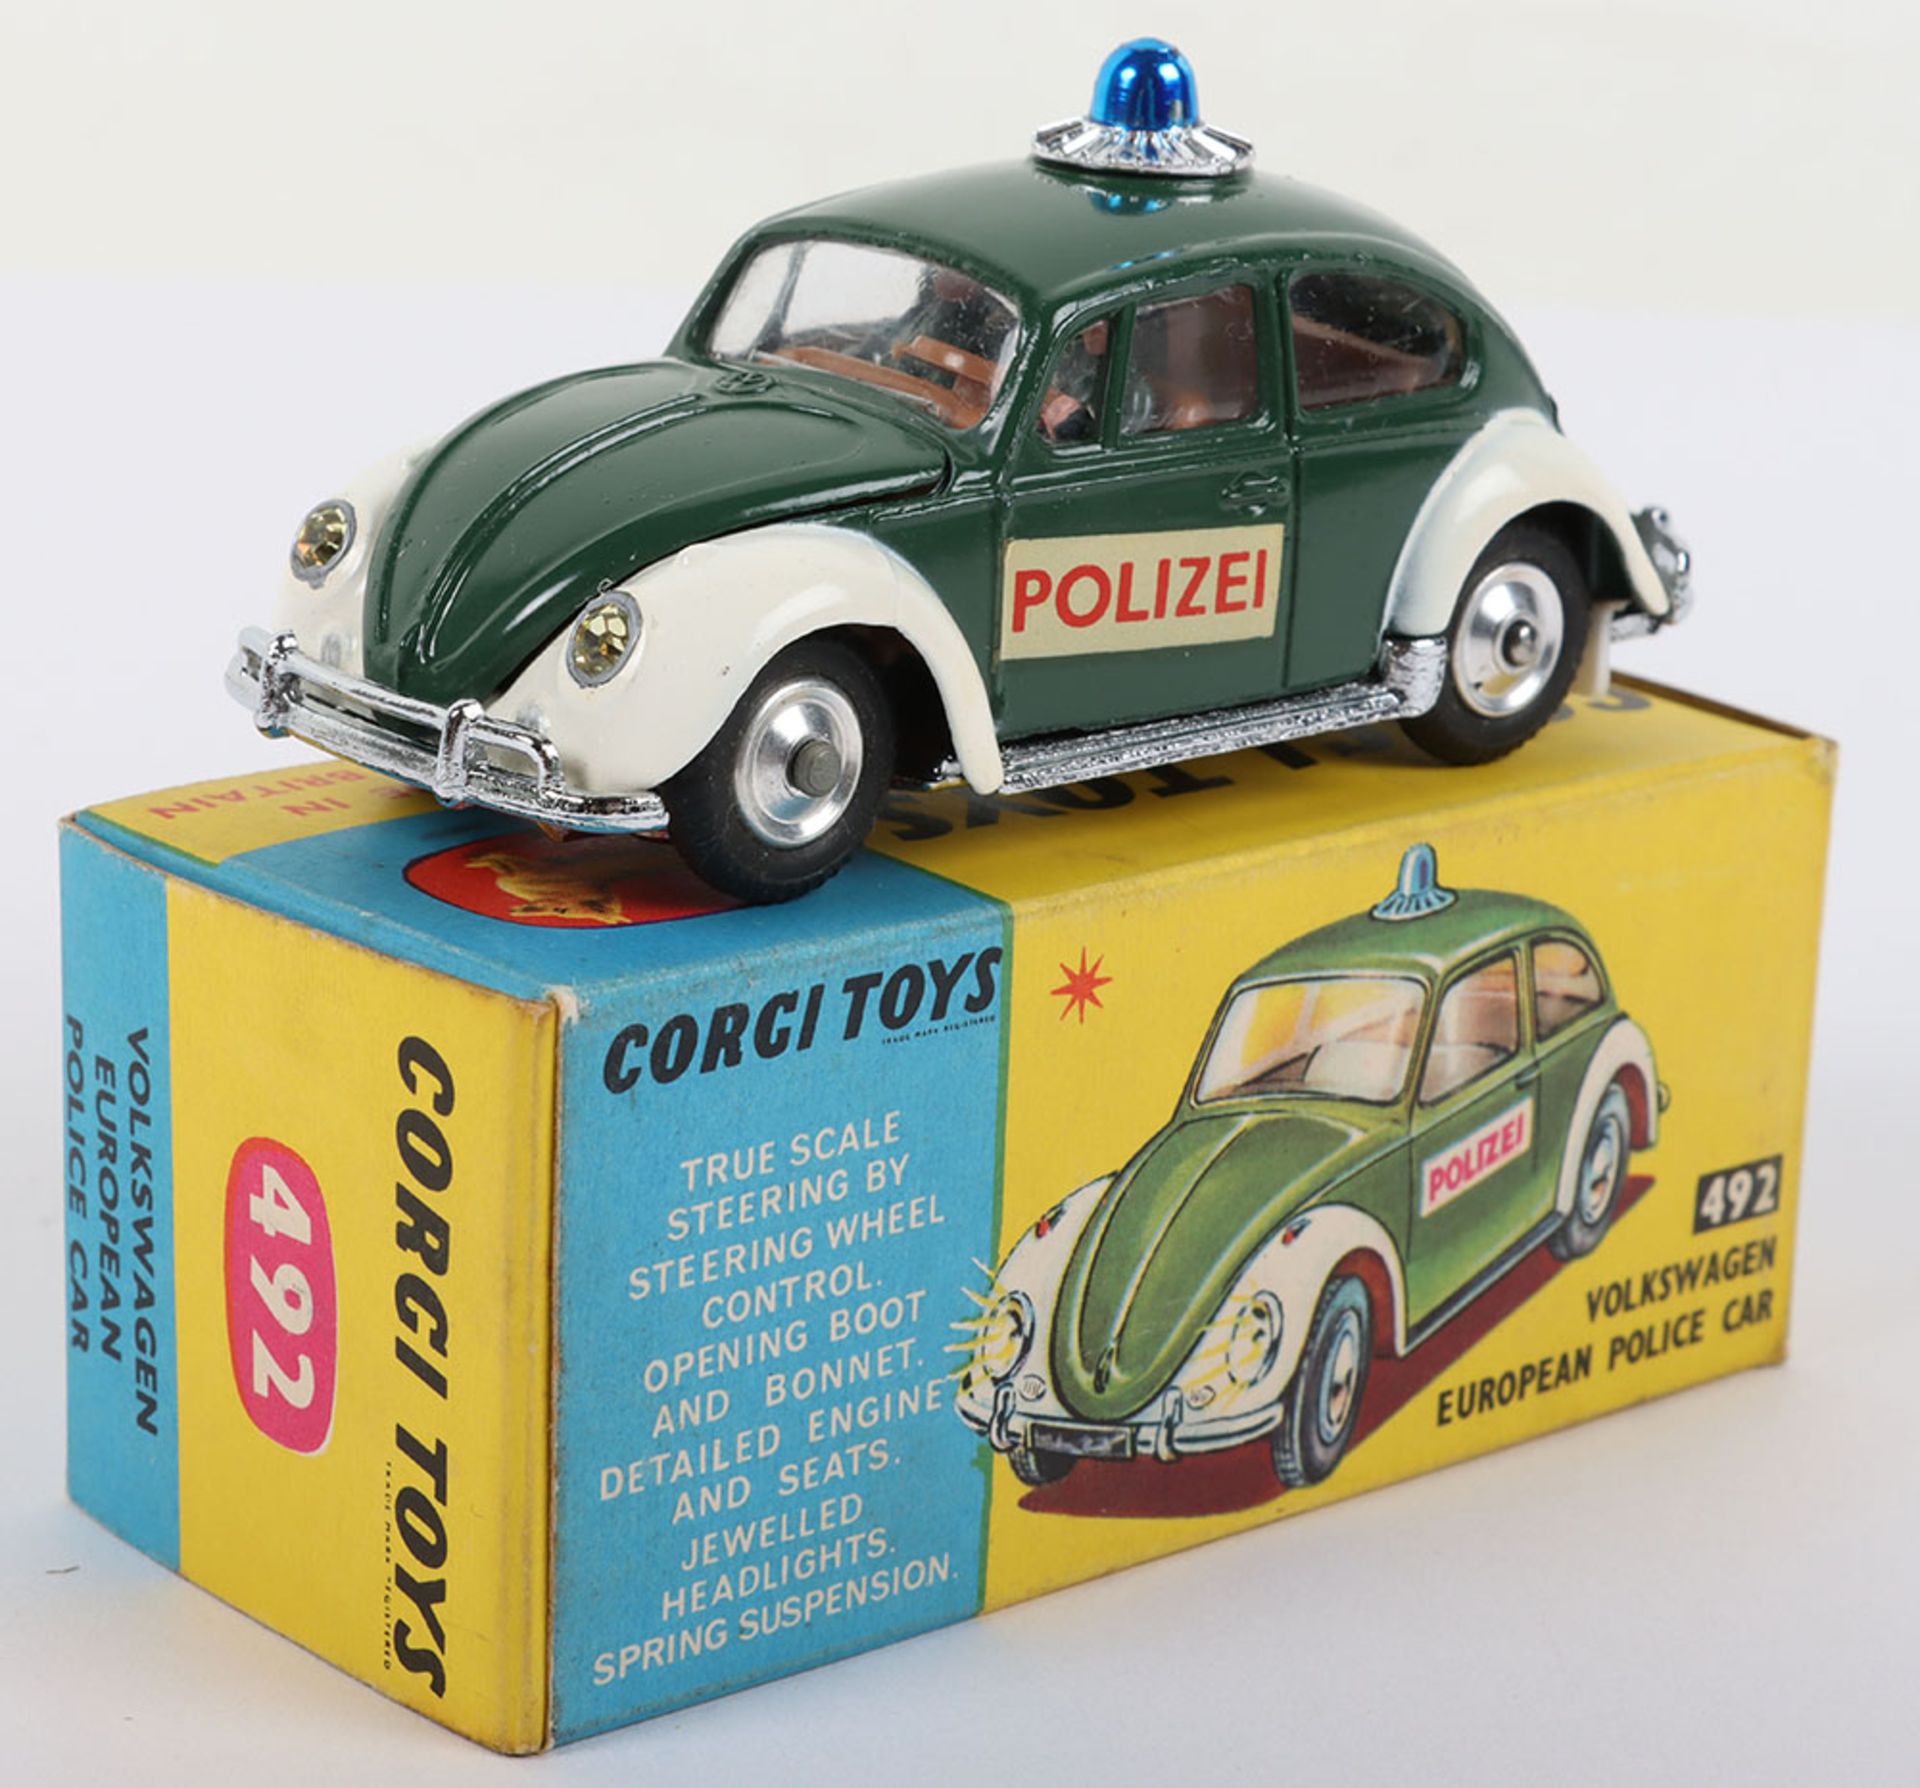 Corgi Toys 492 Volkswagen European Police Car - Image 3 of 6